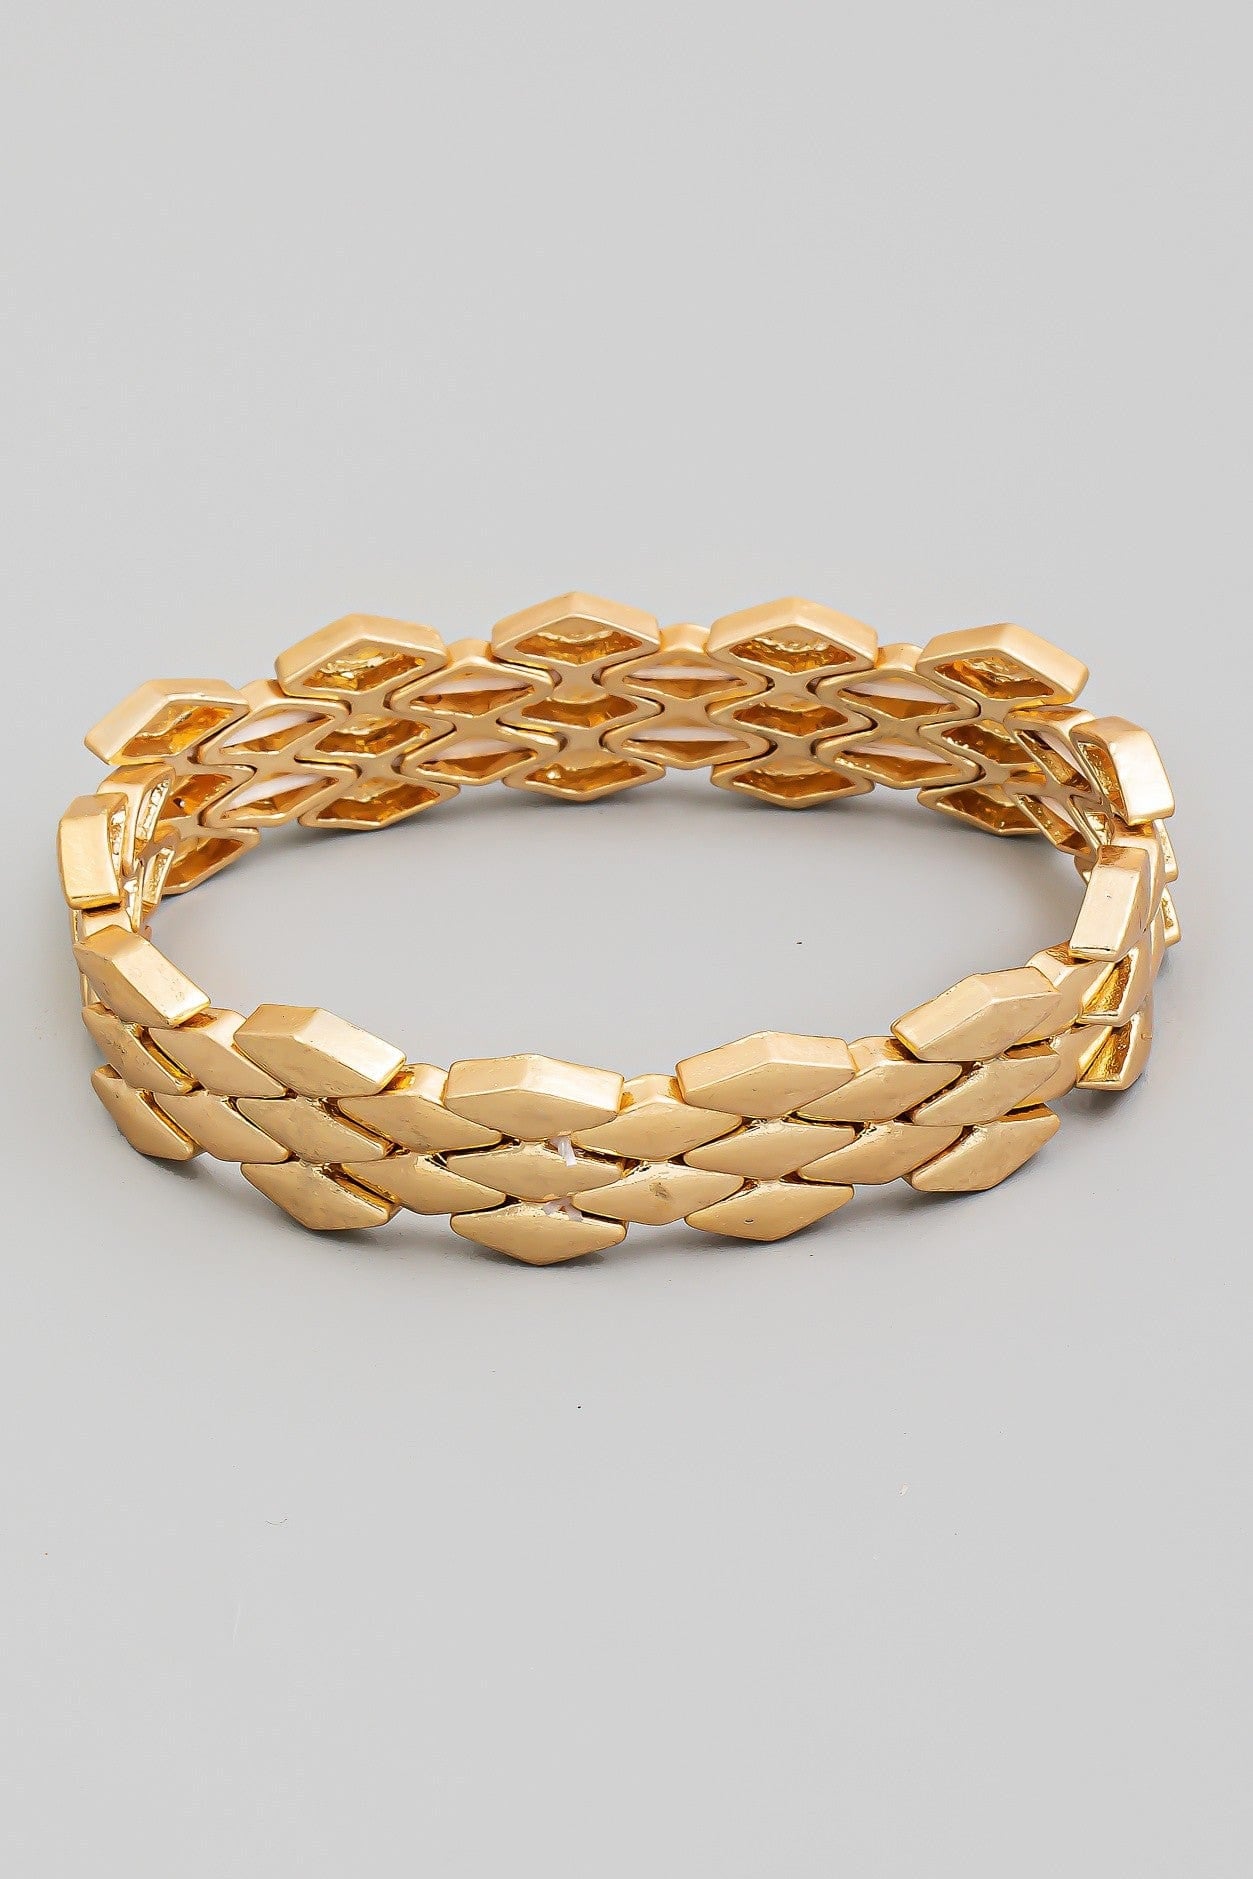 fame accessories Jewelry - Bracelets Metallic Elastic Scales Bracelet In Gold